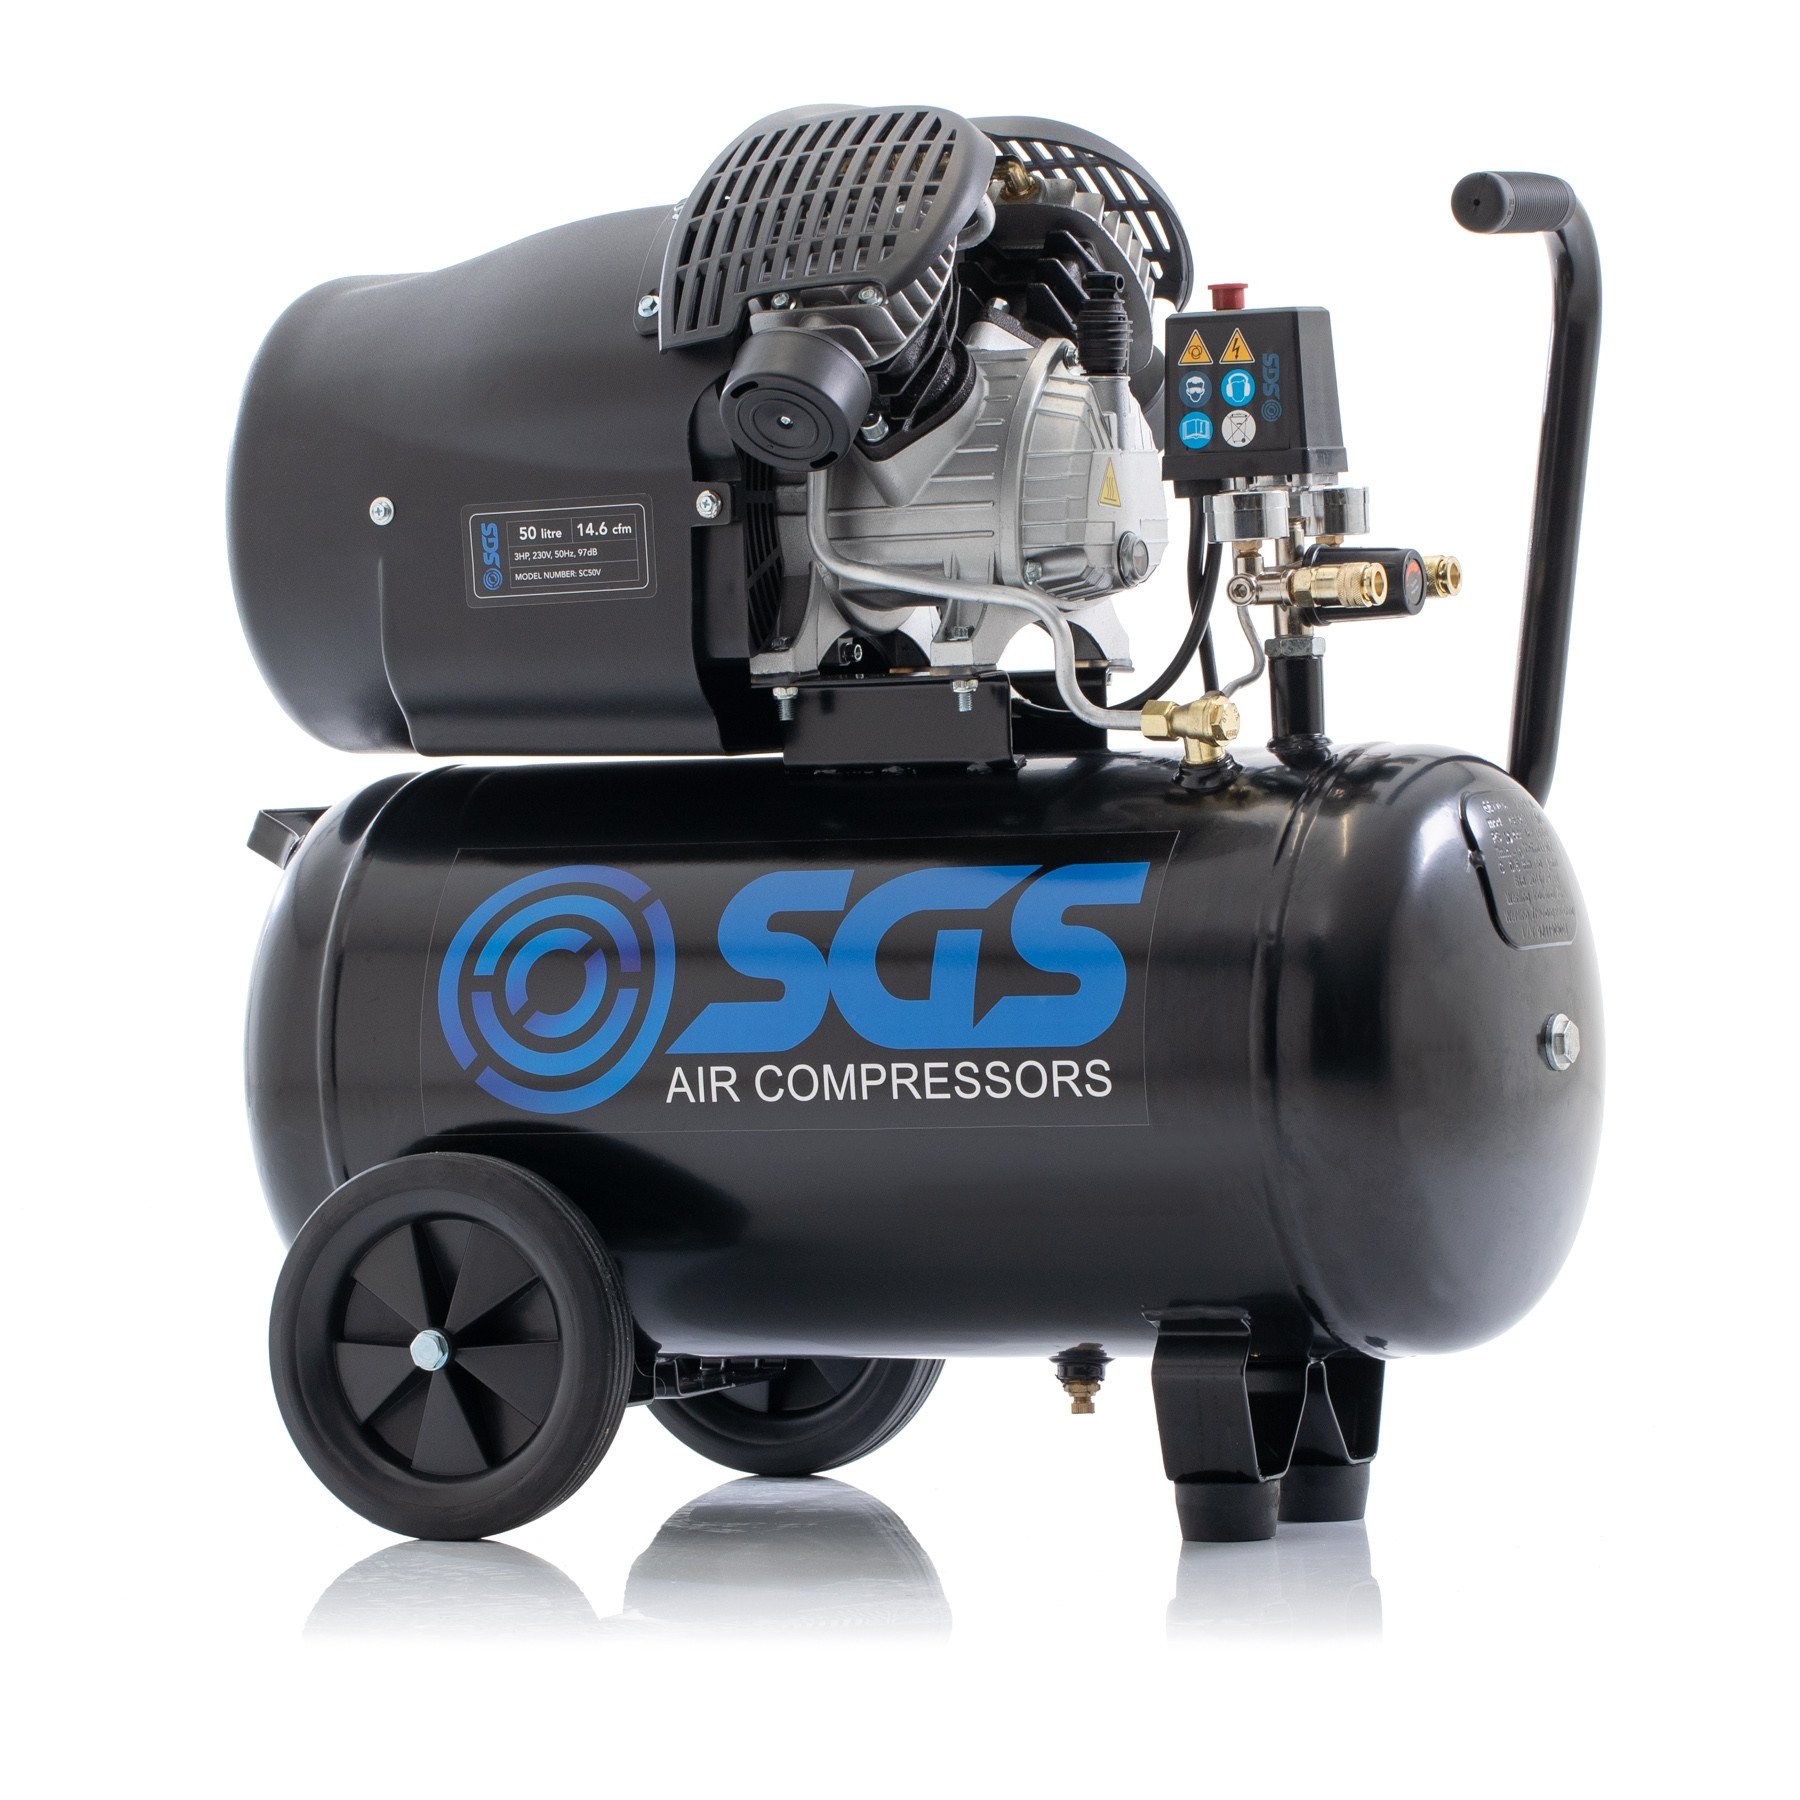 SGS 50升直接驱动V -Twin高动力空气压缩机-14.6CFM 3.0HP 50L